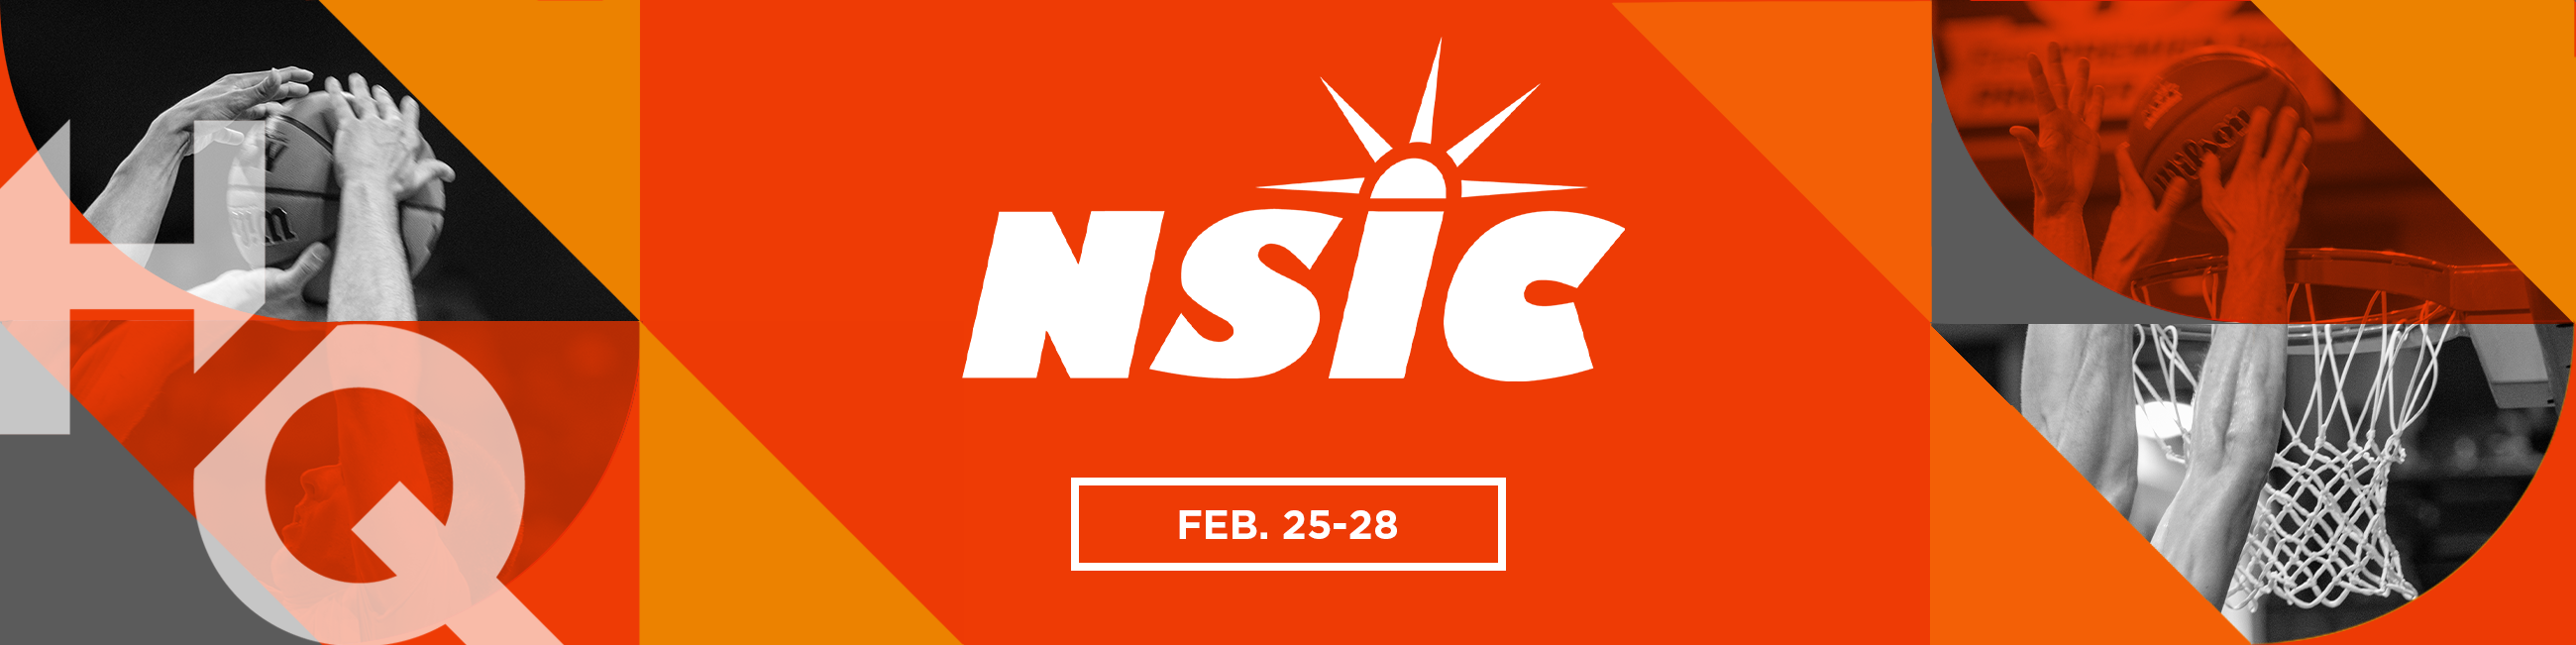 NSIC Announced 2022-23 Championship Information - Northern Sun  Intercollegiate Conference